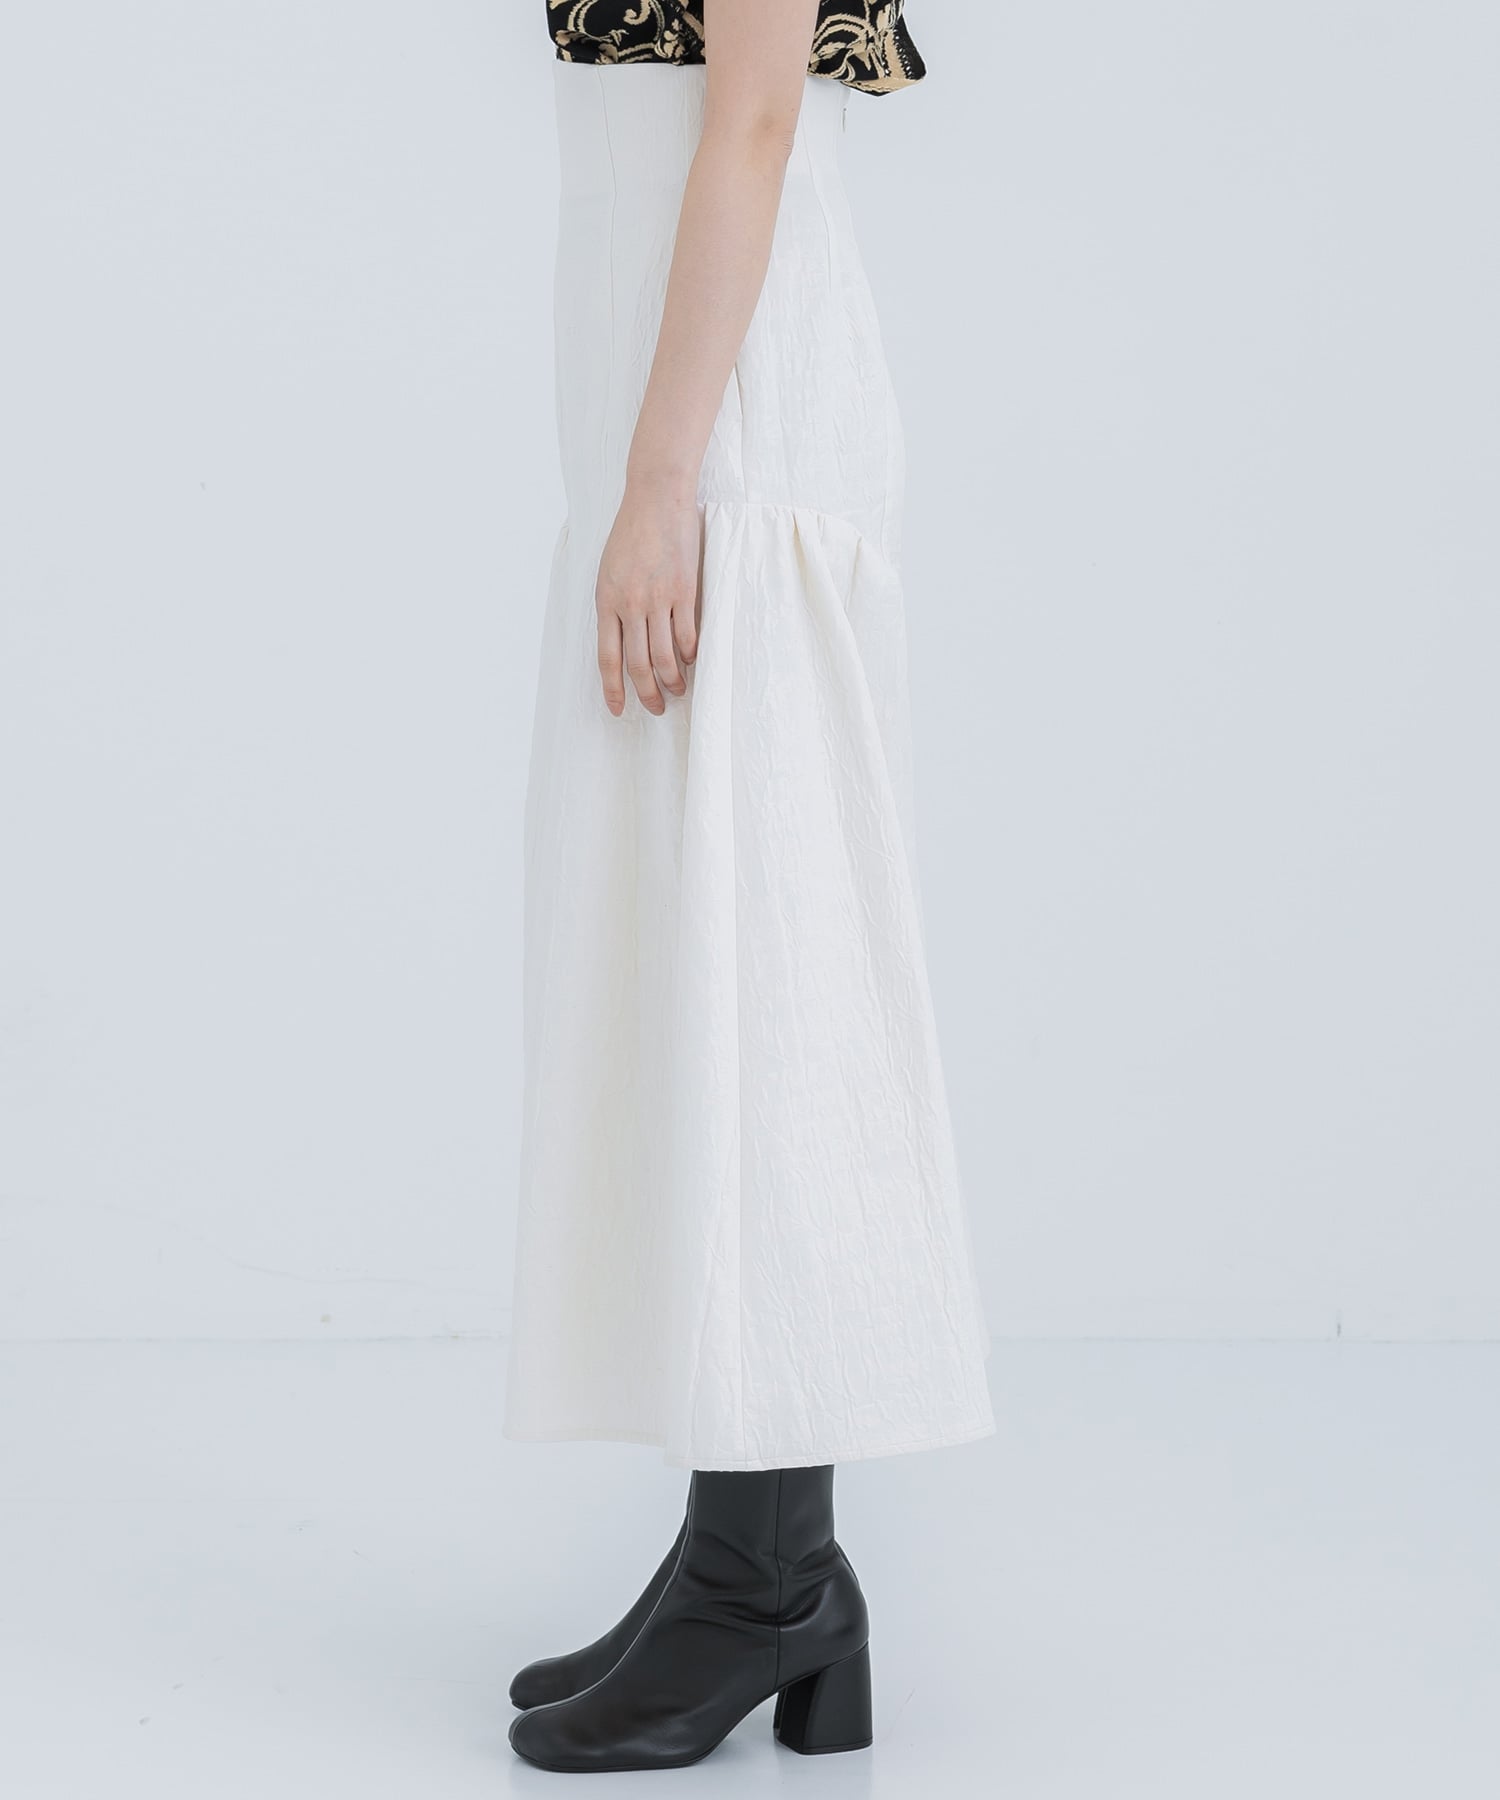 Unlevel Dyeing Box Pleats Skirt Mame Kurogouchi